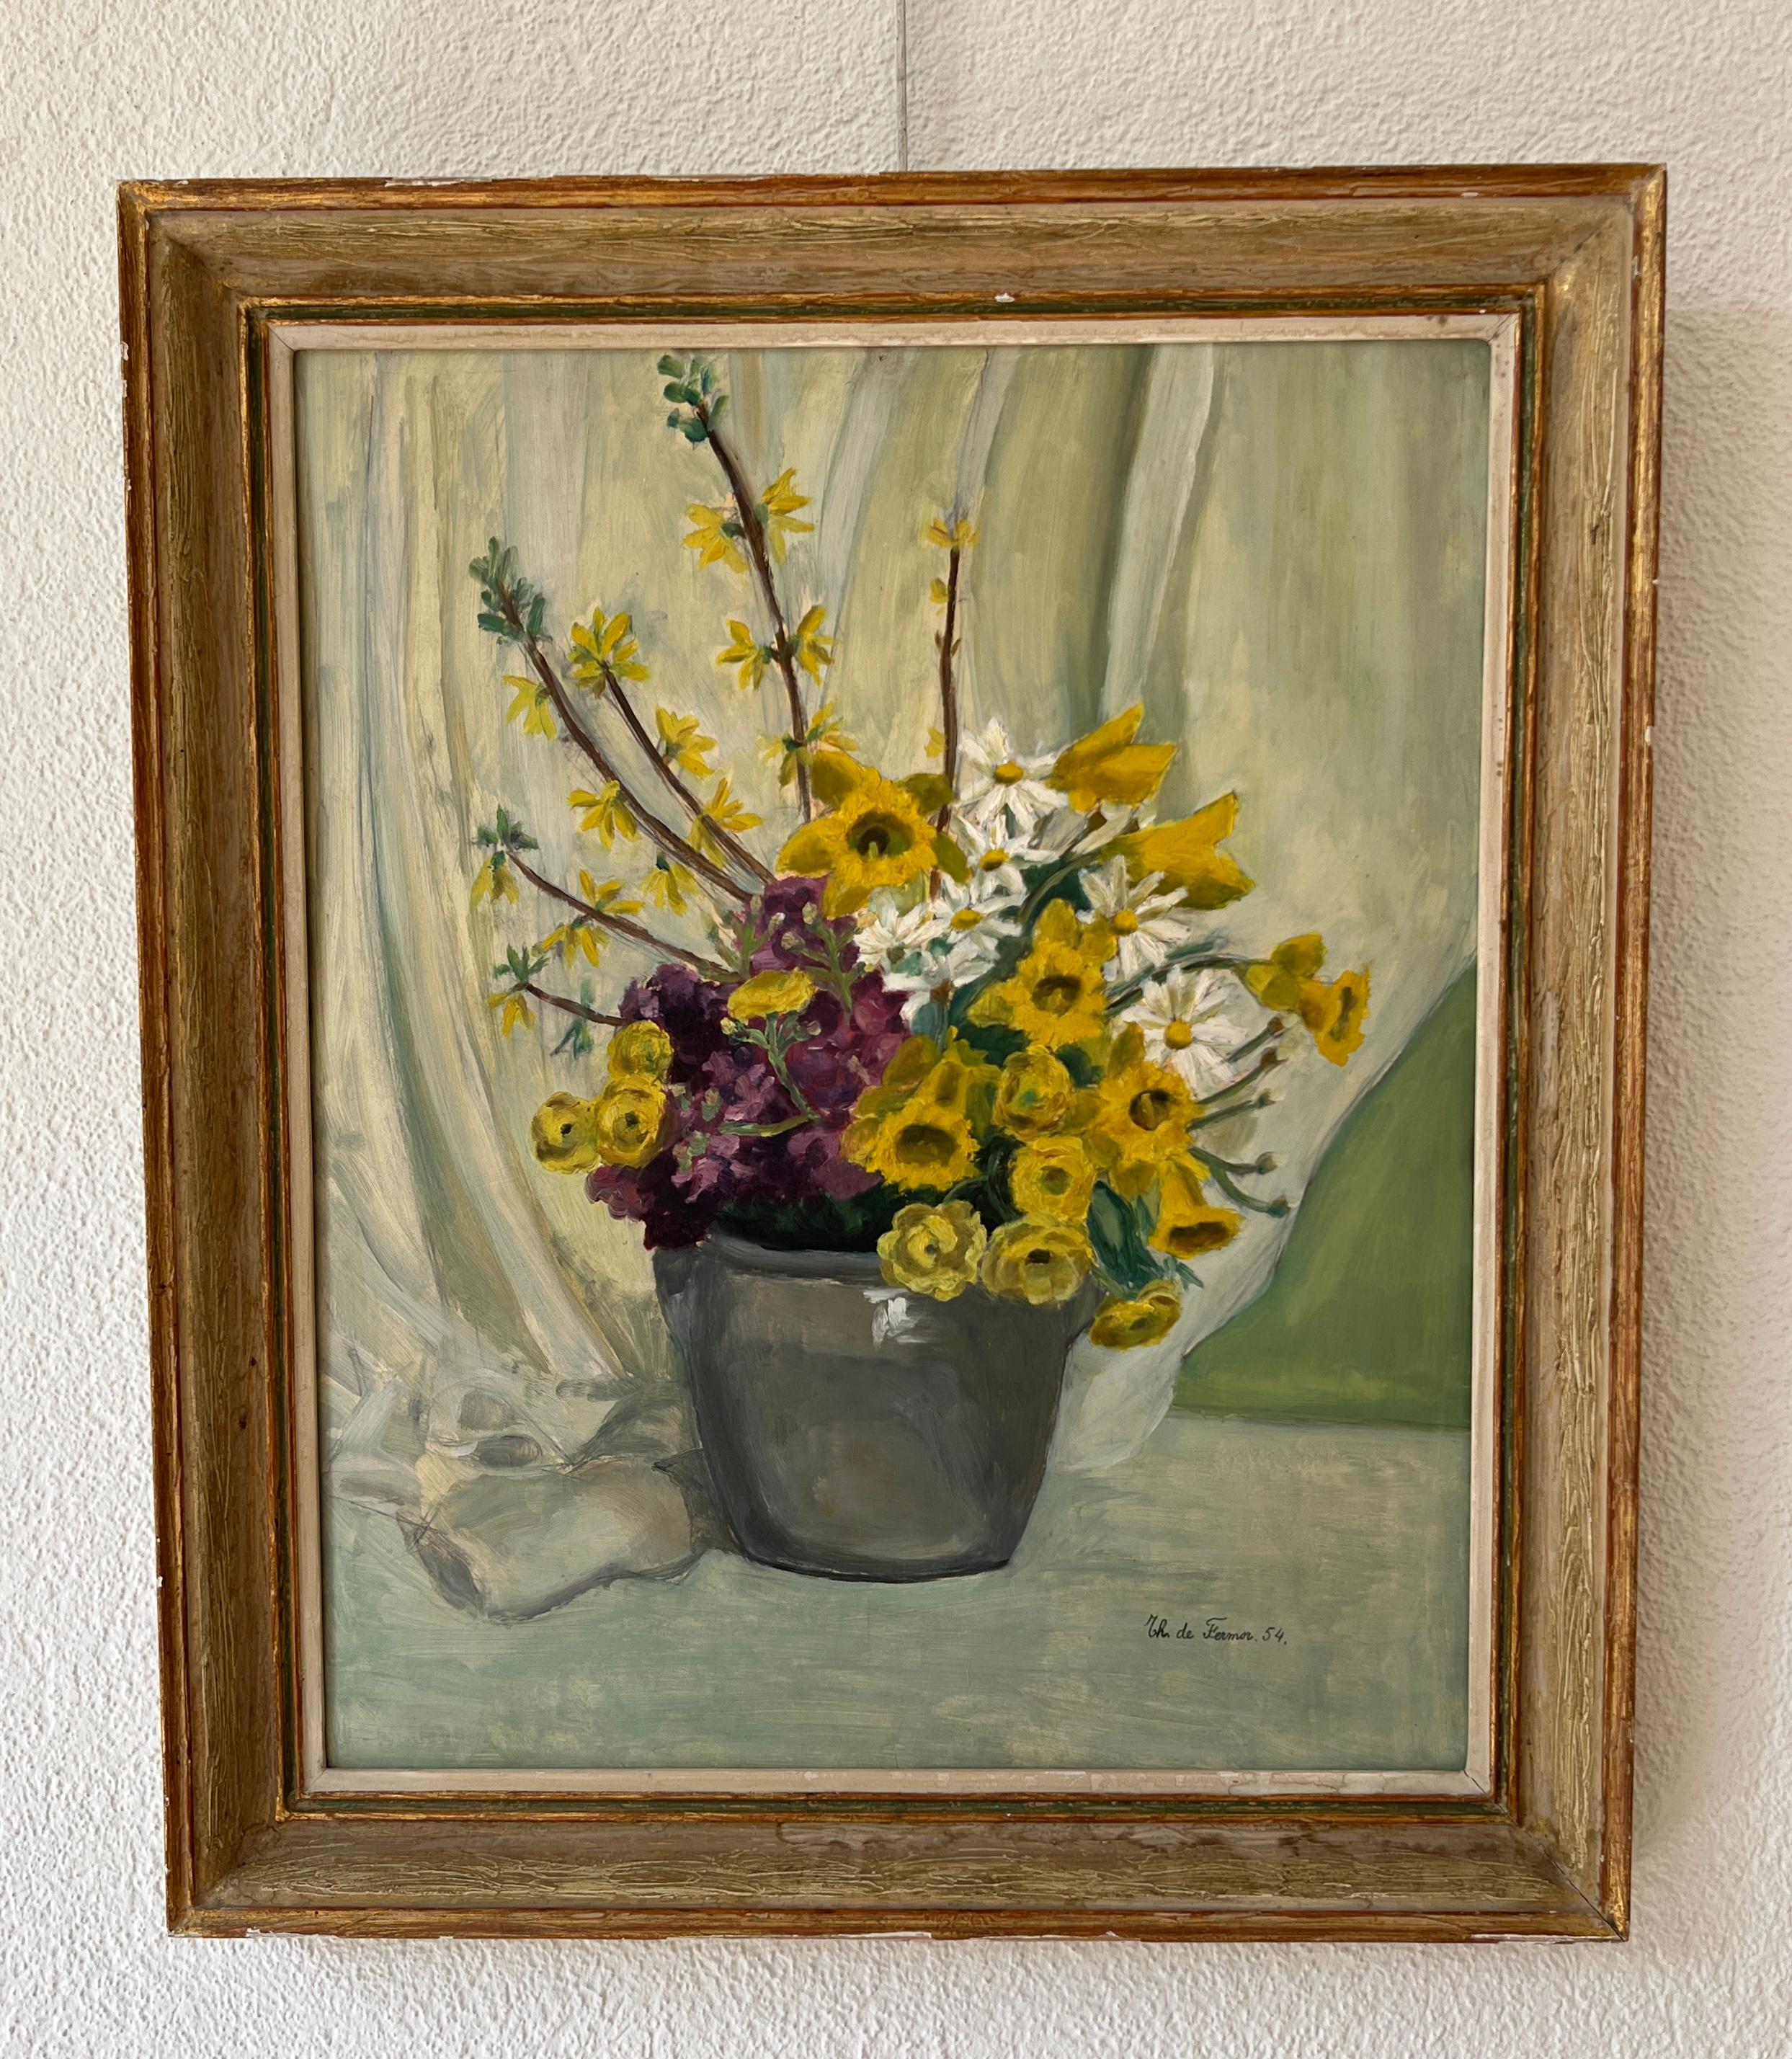 Blumentopf – Painting von Th. De Fermor